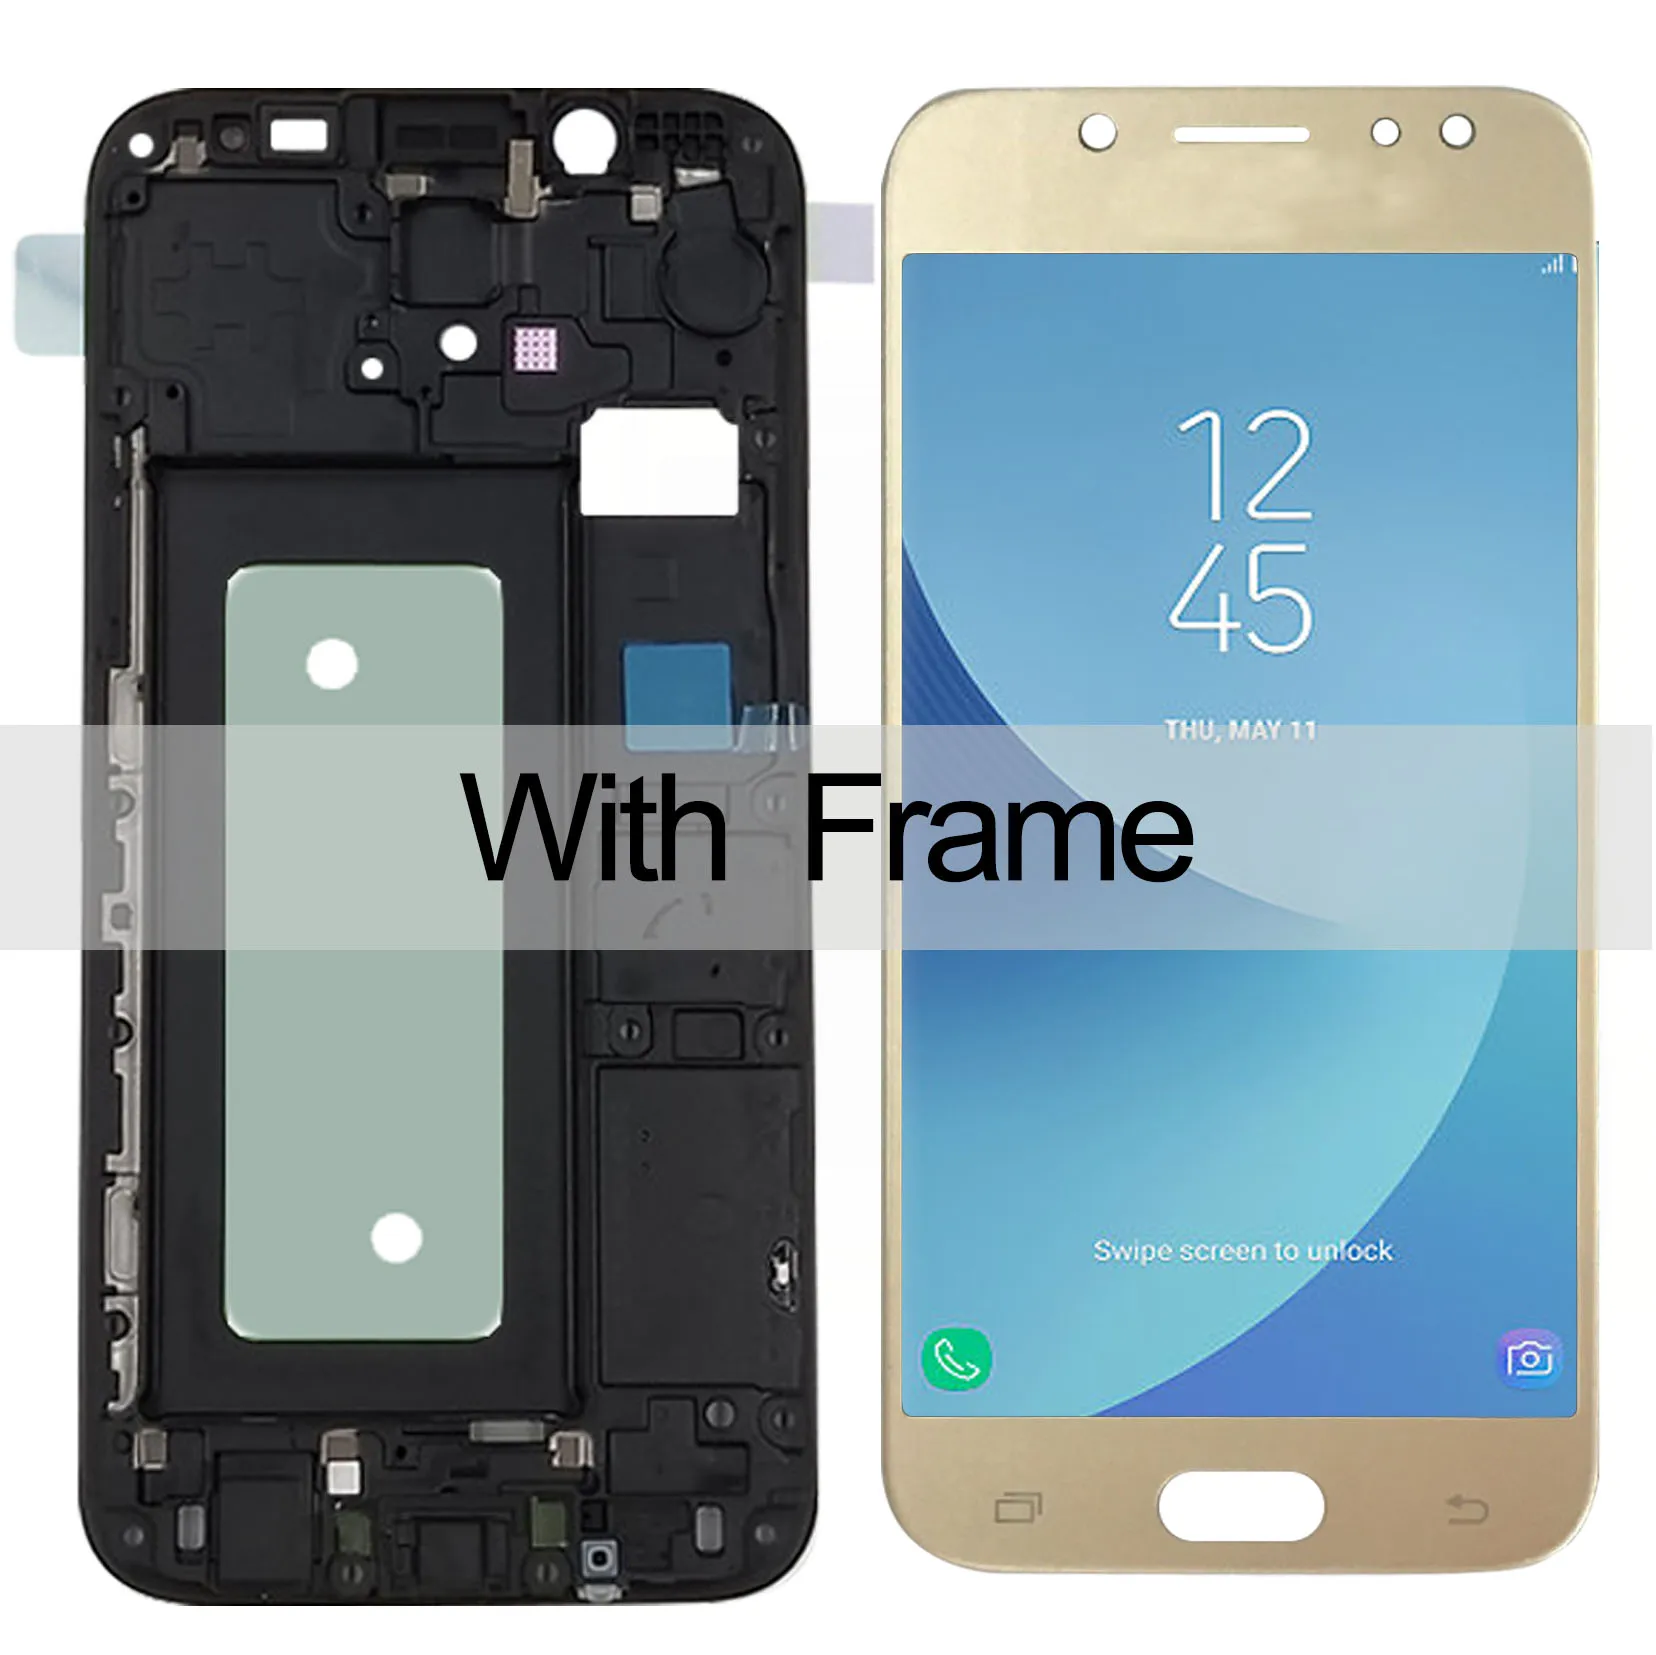 J530 ЖК-дисплей для Samsung Galaxy J5 Pro J530 J530F J530FN SM-J530F/M/DS сенсорный экран дигитайзер сборка Замена Рамки - Цвет: gold  with frame